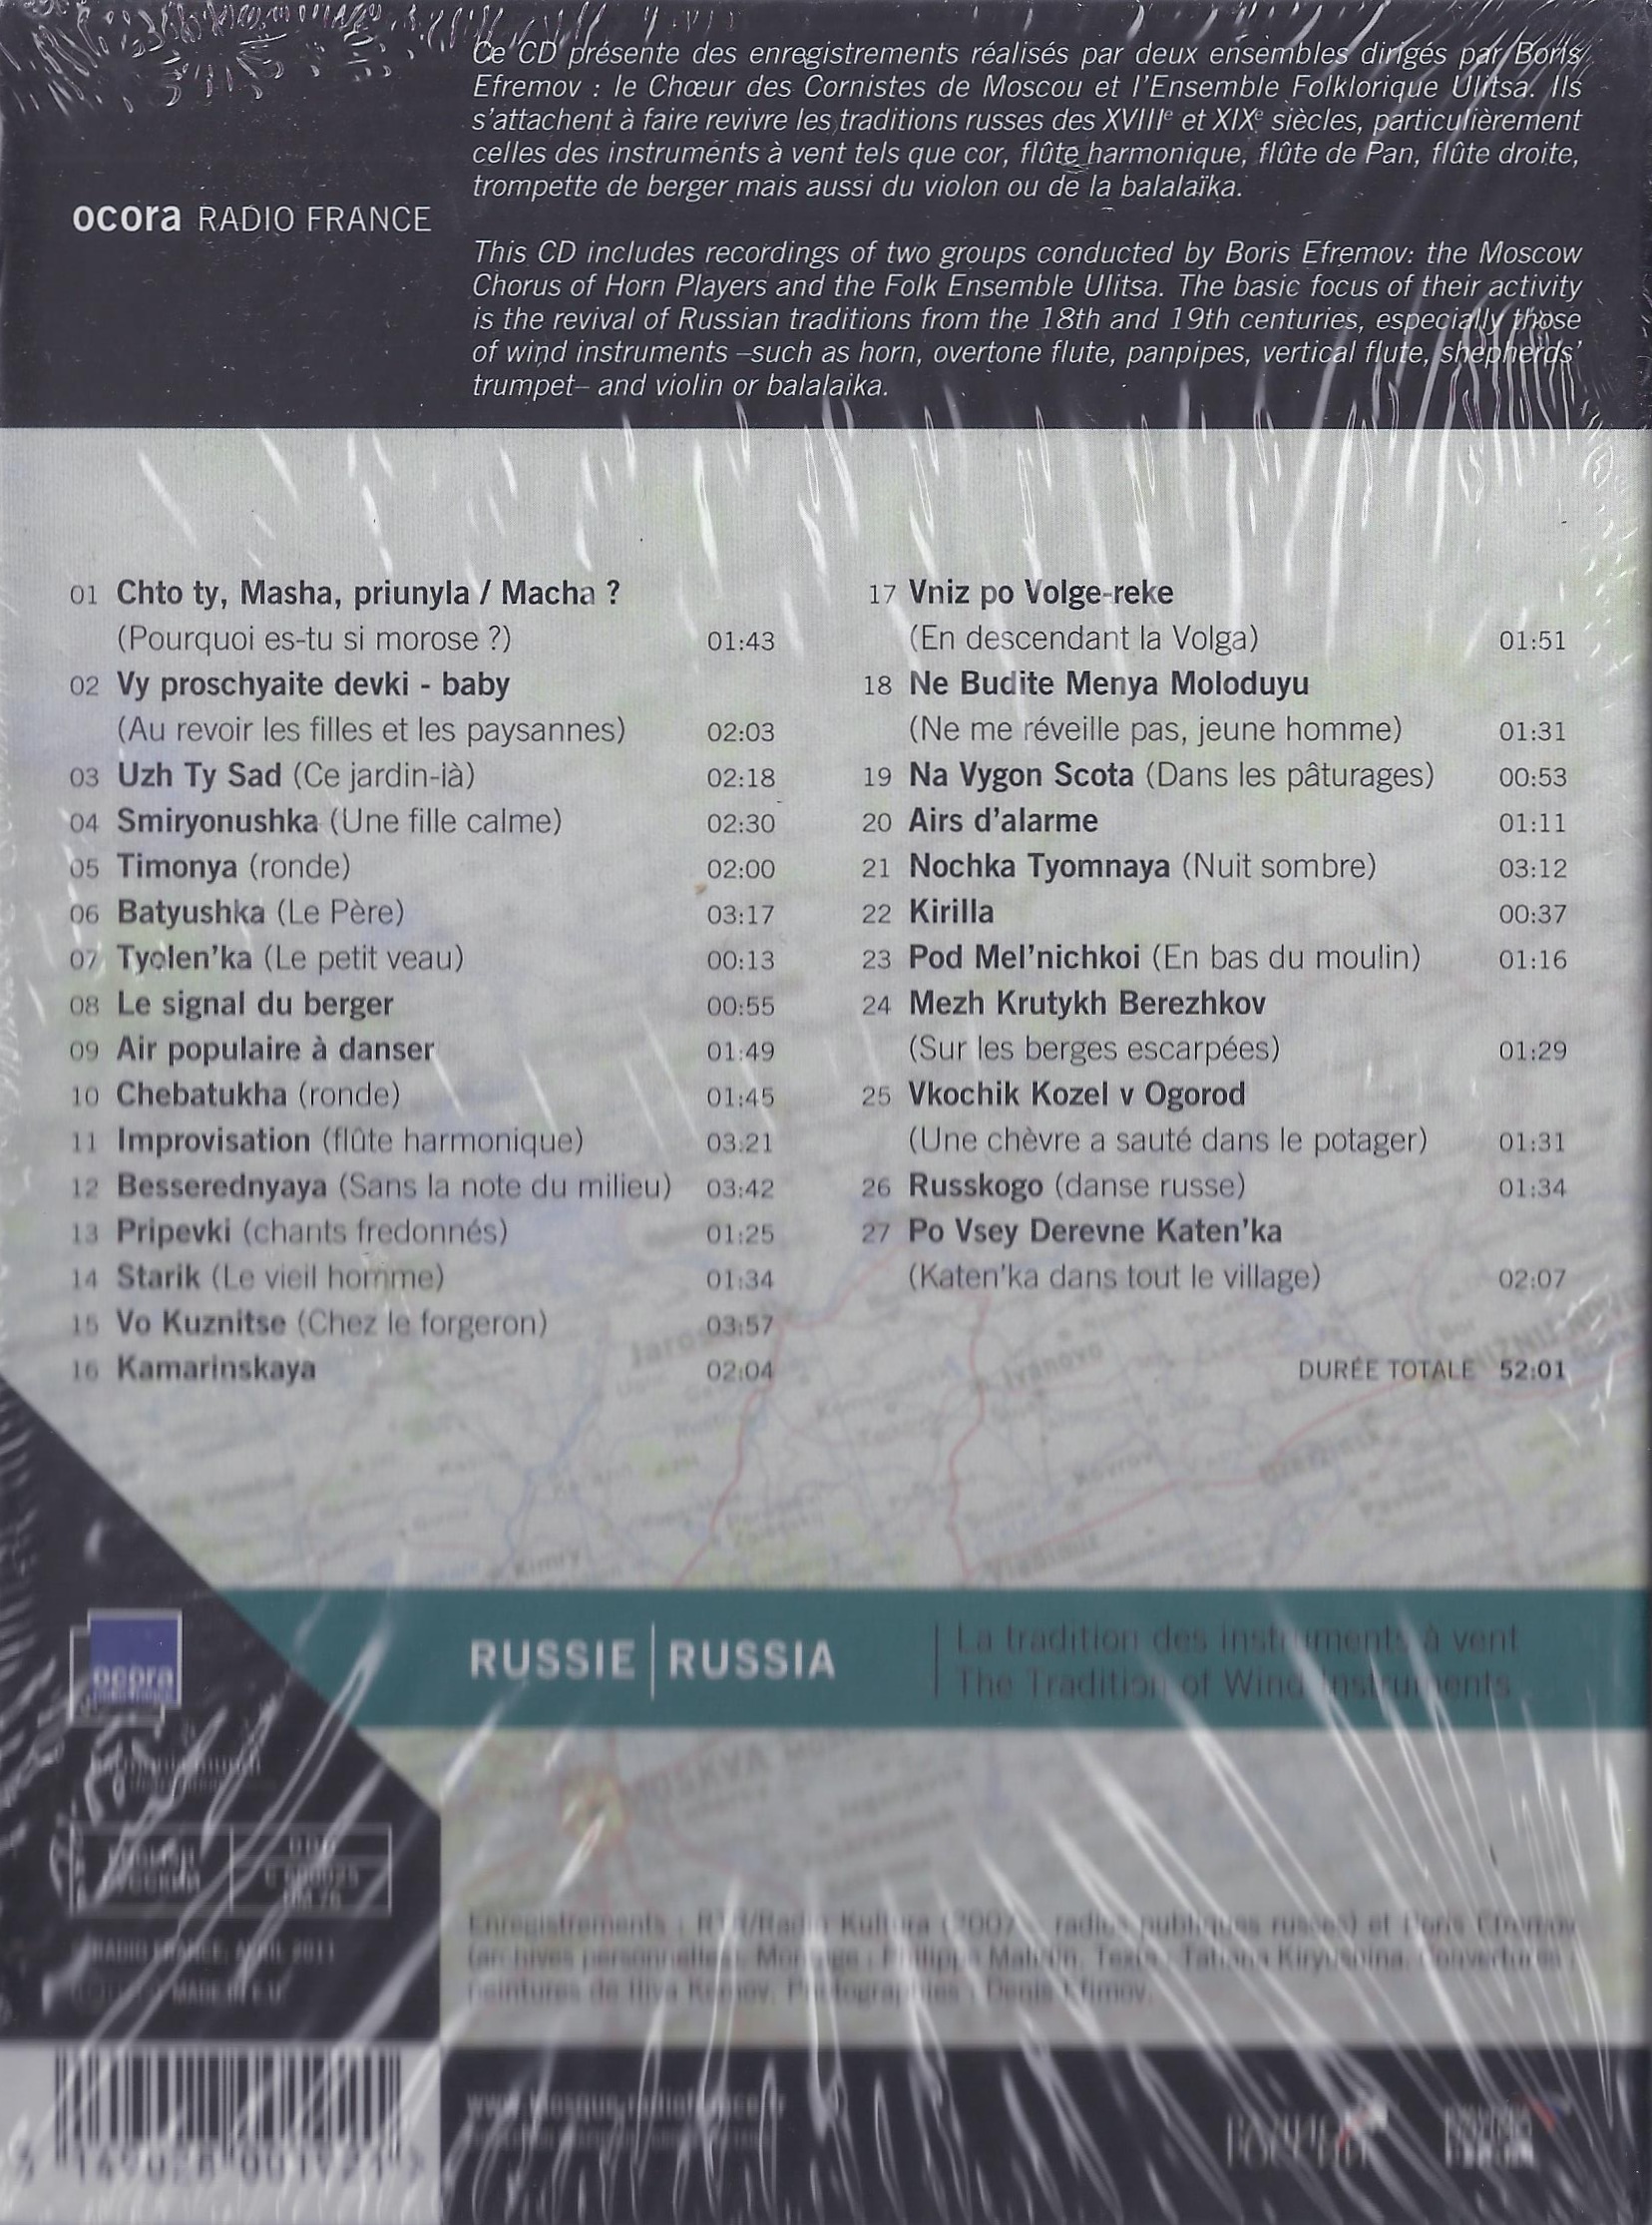 RUSSIE -Tradition Of Wind Instruments - slide-1